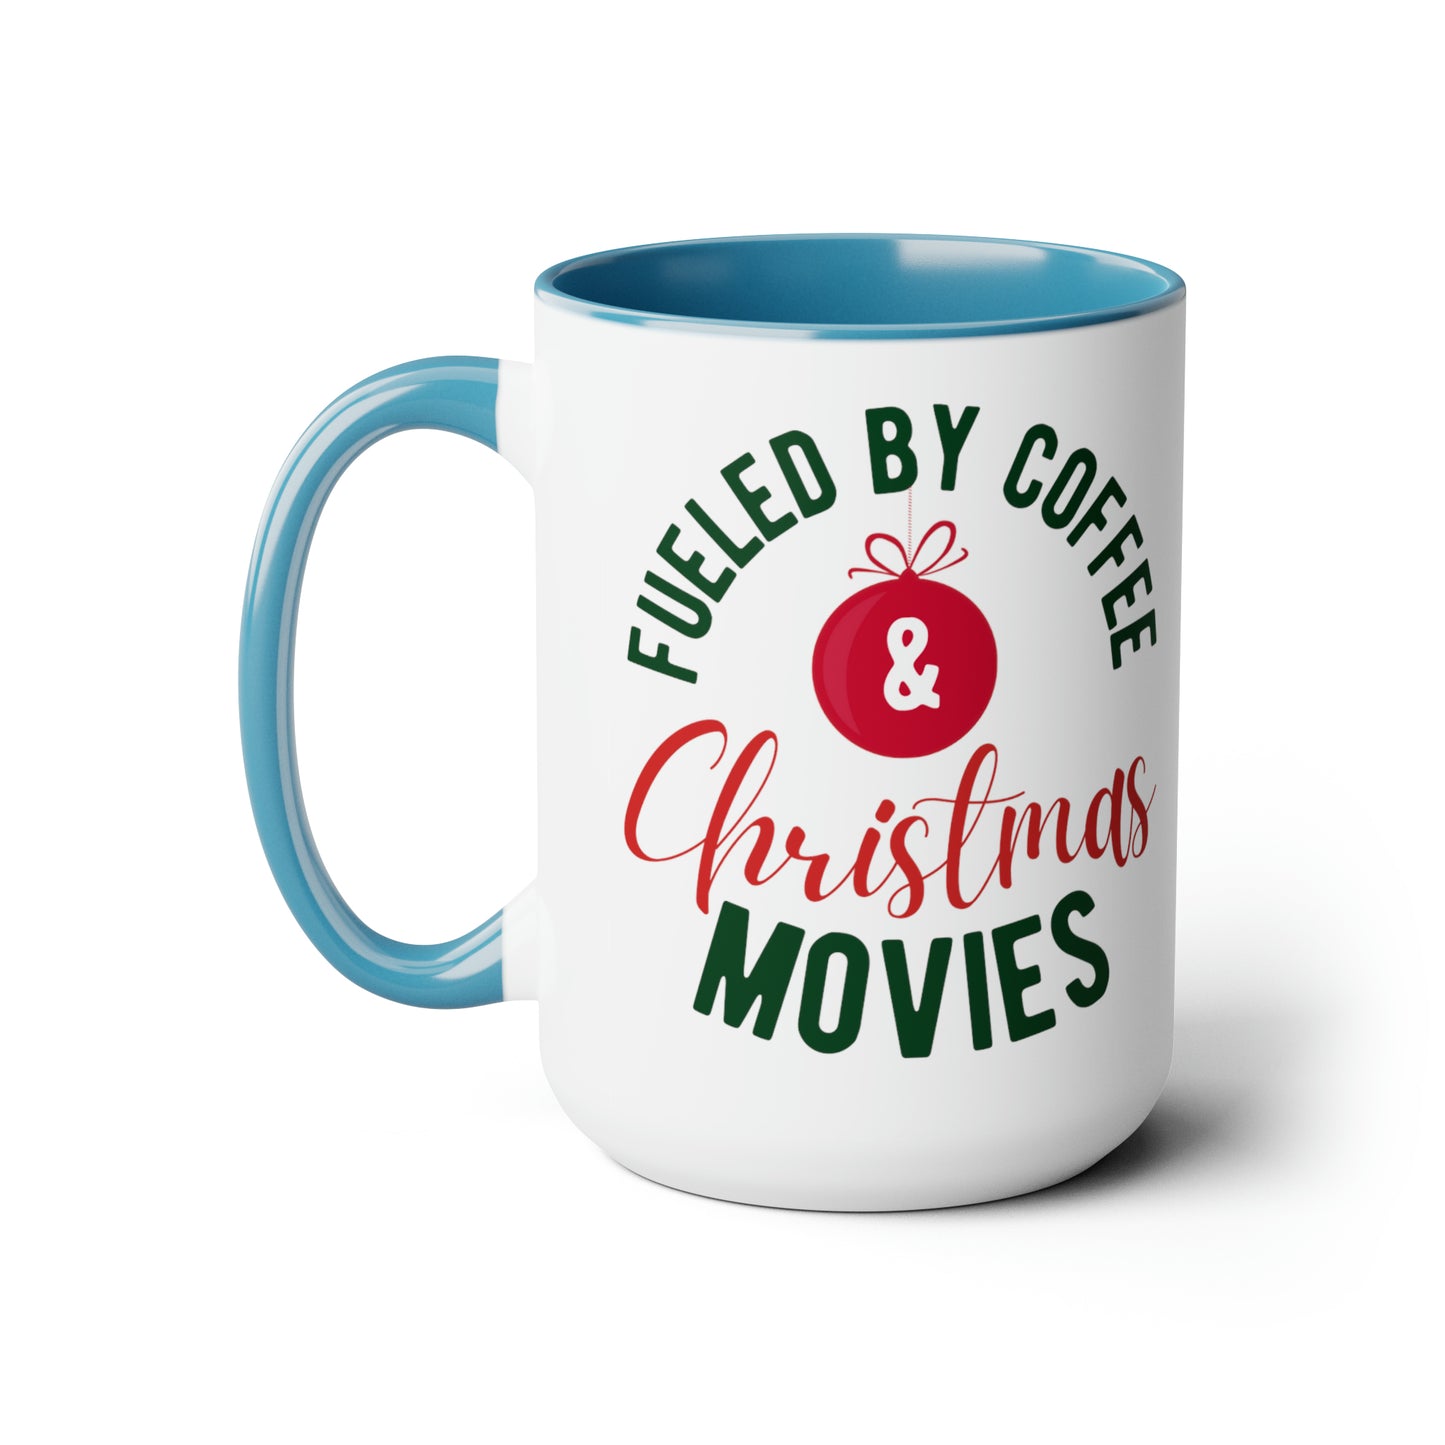 Coffee and Christmas movies Two-Tone Coffee Mugs, 15oz